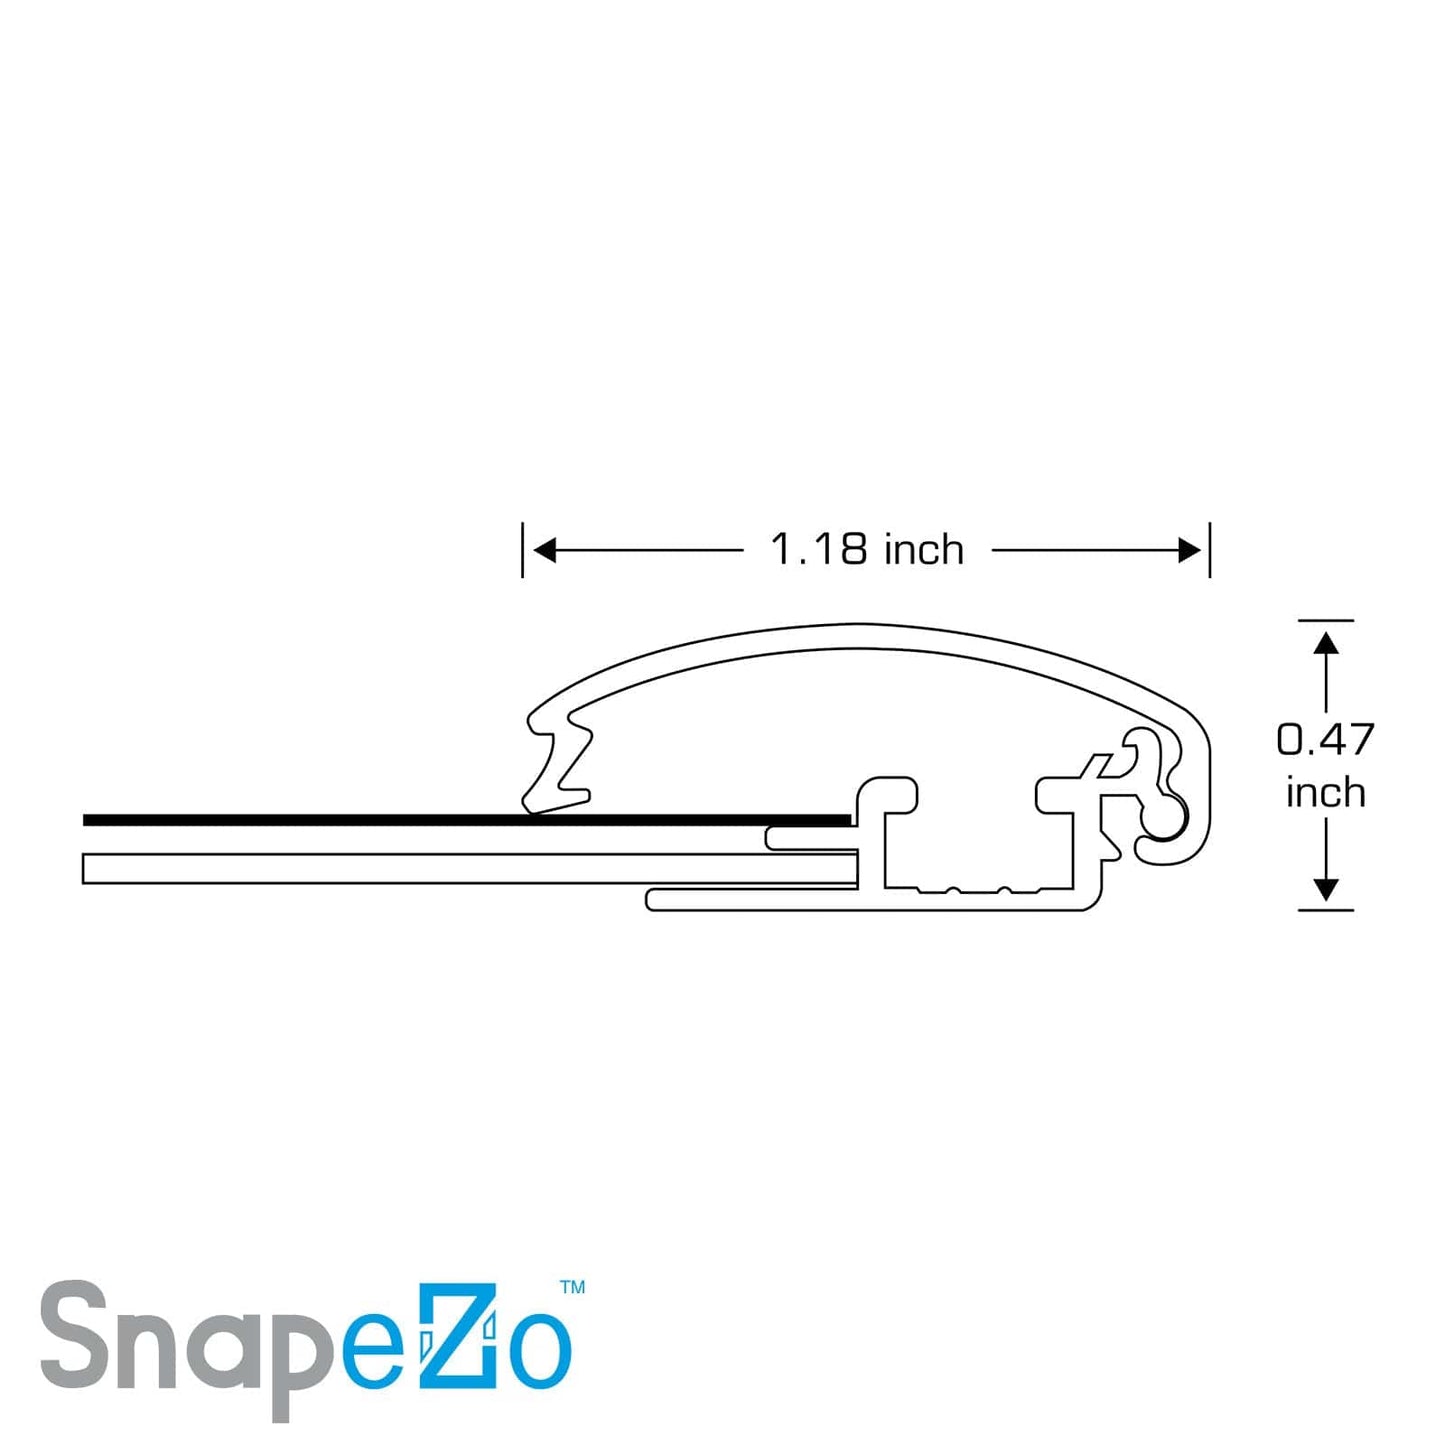 8.5x11 Yellow SnapeZo® Snap Frame - 1.2" Profile - Snap Frames Direct